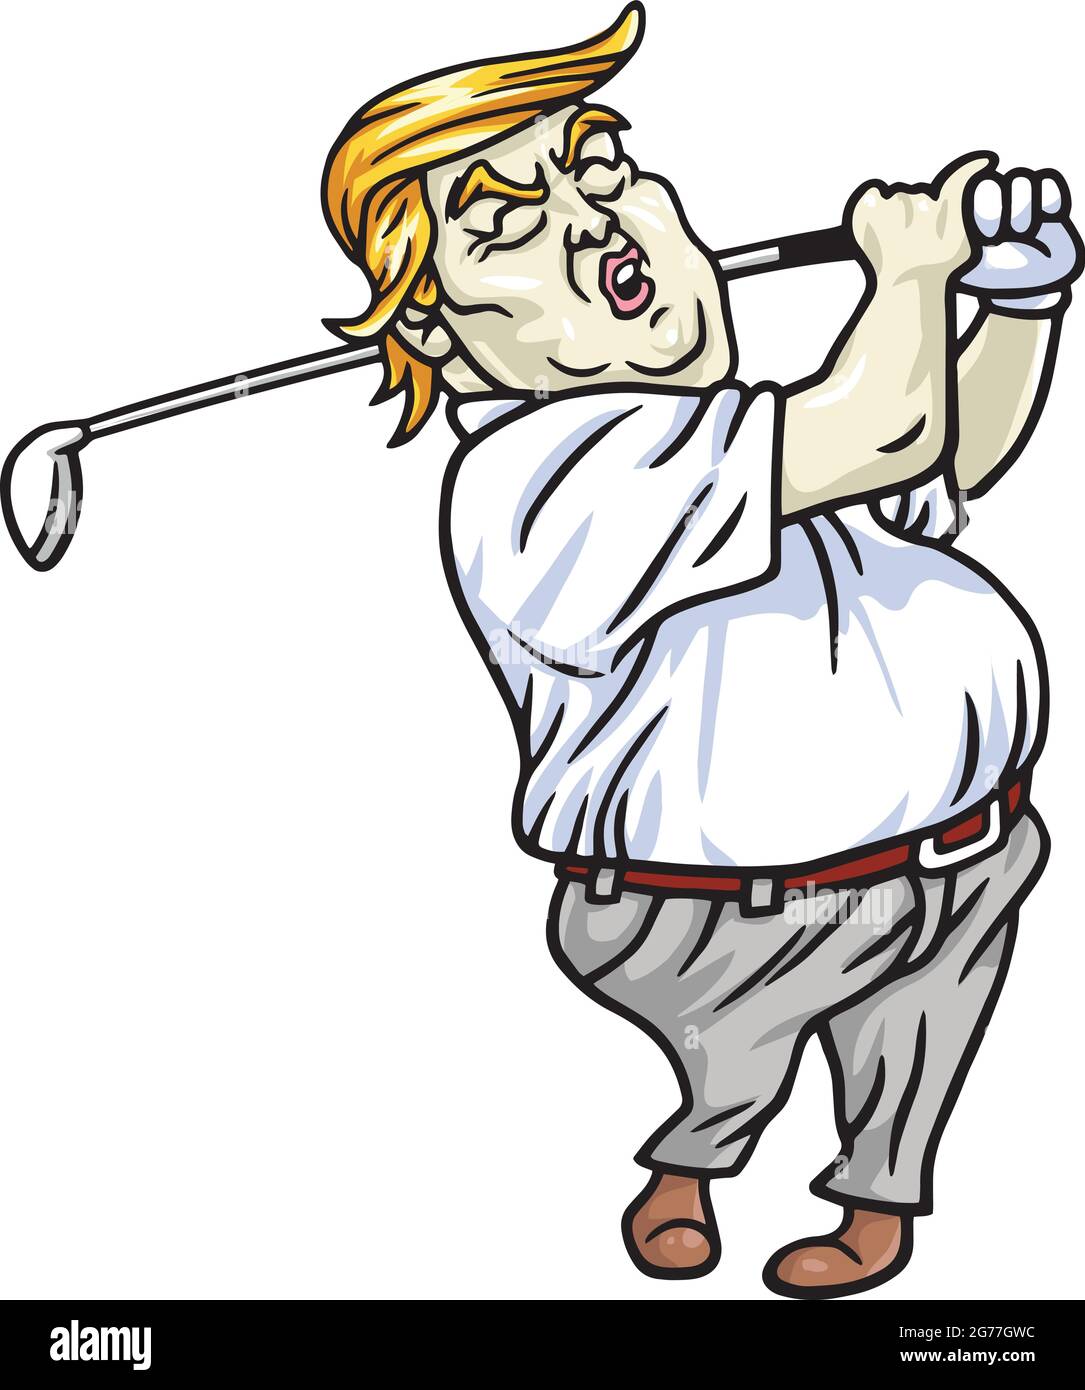 Donald Trump Playing Golf. Cartoon Vector Illustration Stock Vector